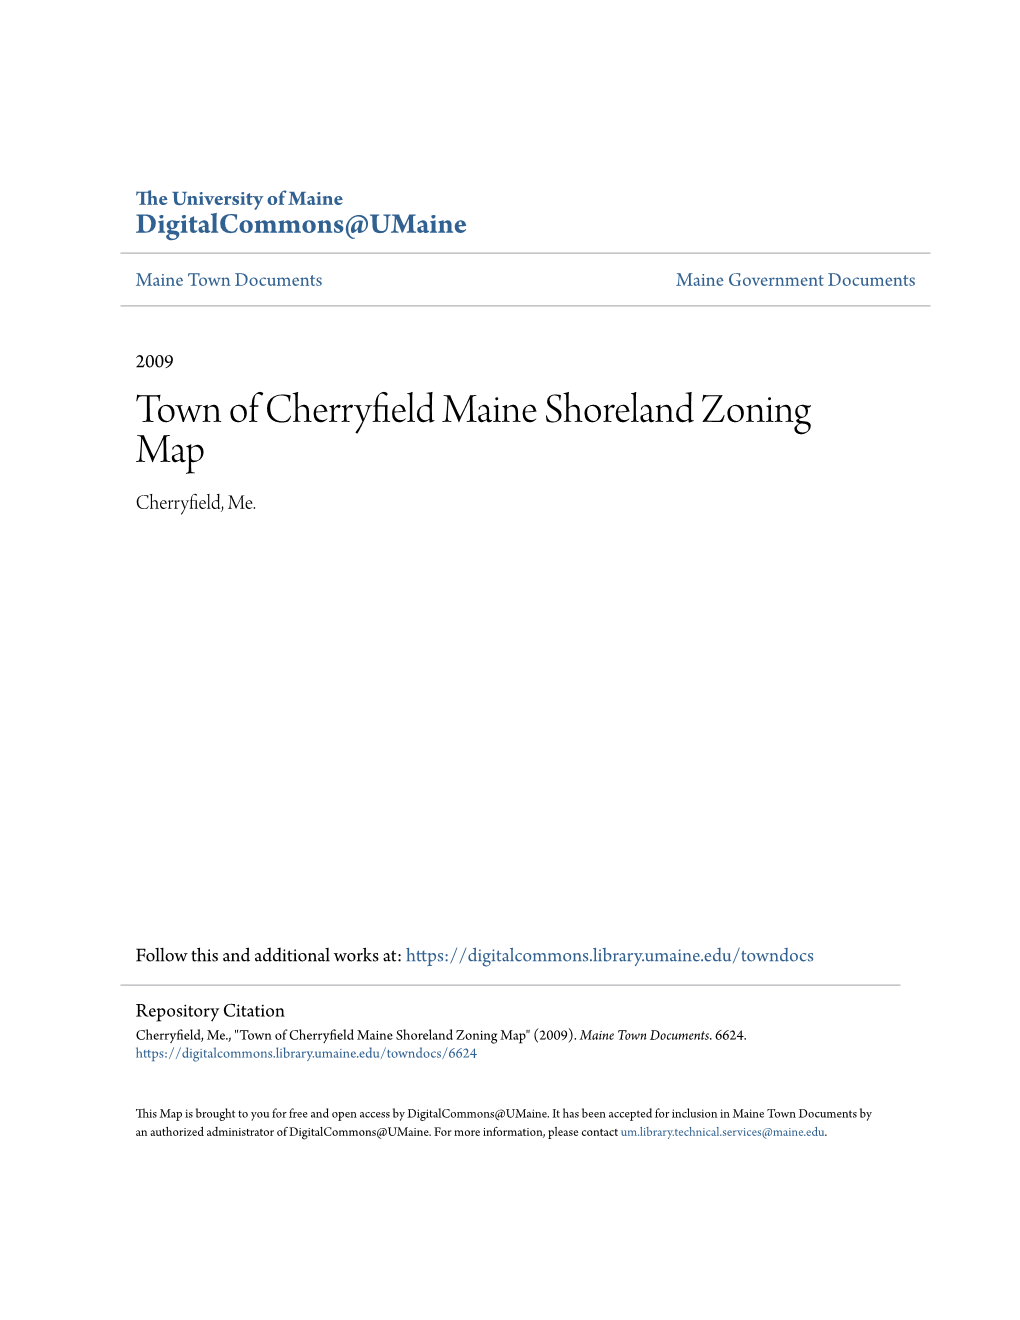 Town of Cherryfield Maine Shoreland Zoning Map" (2009)